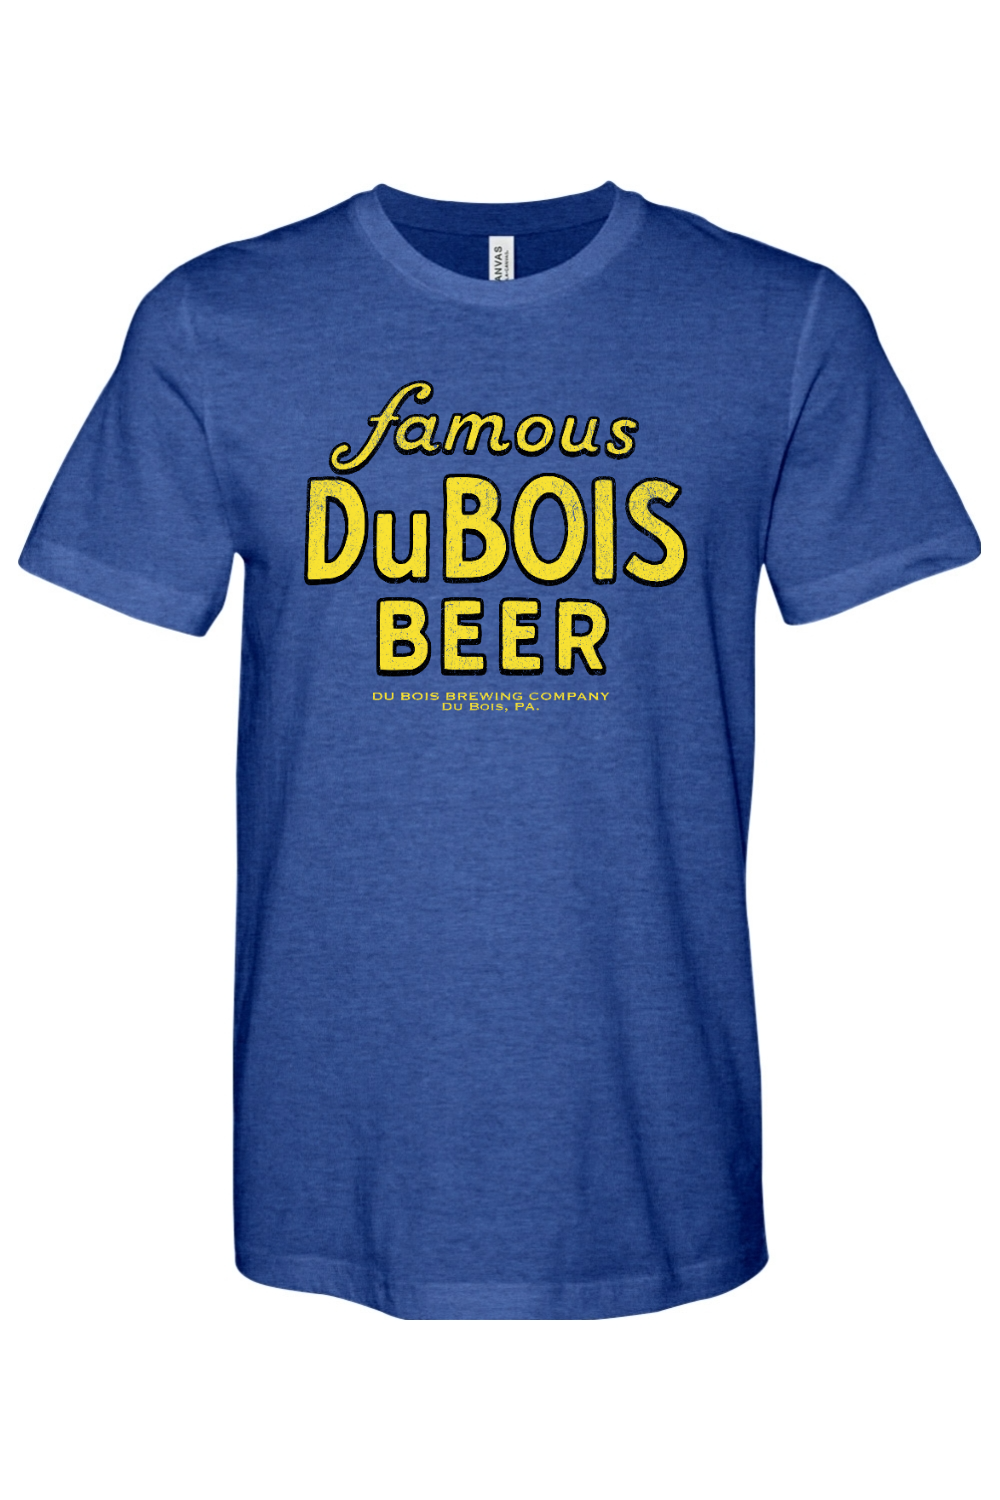 Famous DuBois Beer - DuBois, PA - Yinzylvania